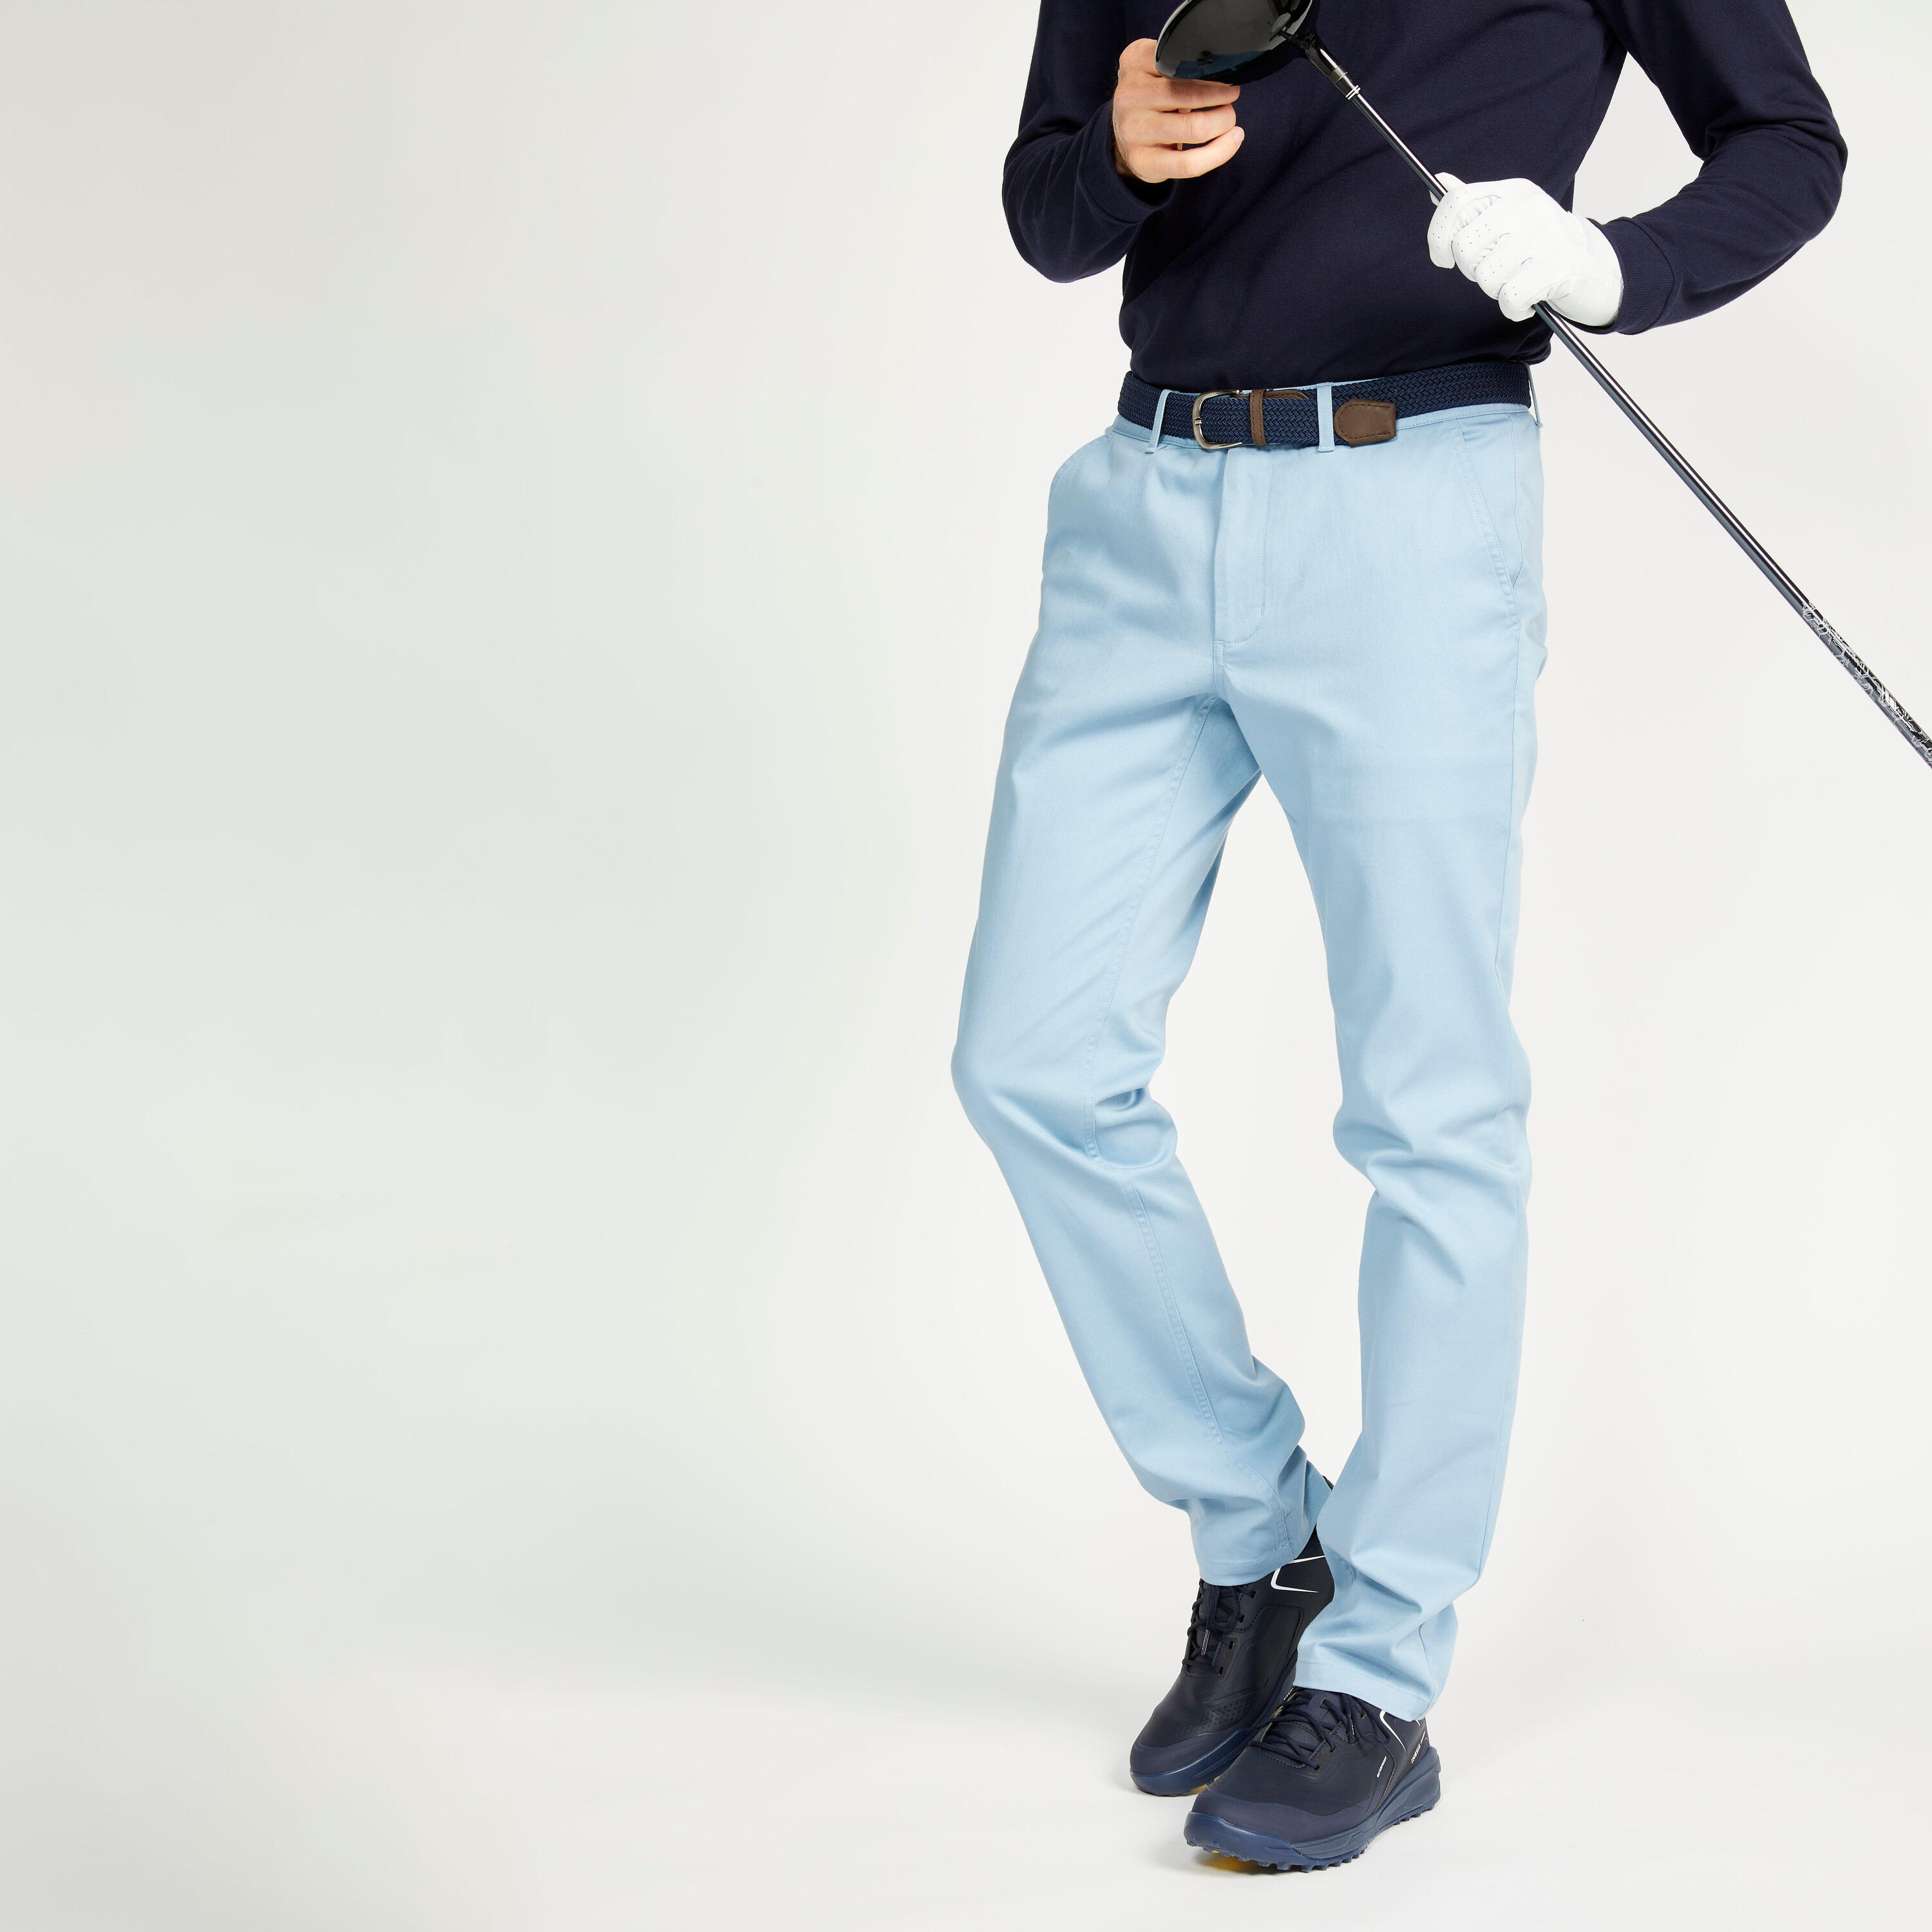 Men's golf trousers - MW500 denim blue 1/6